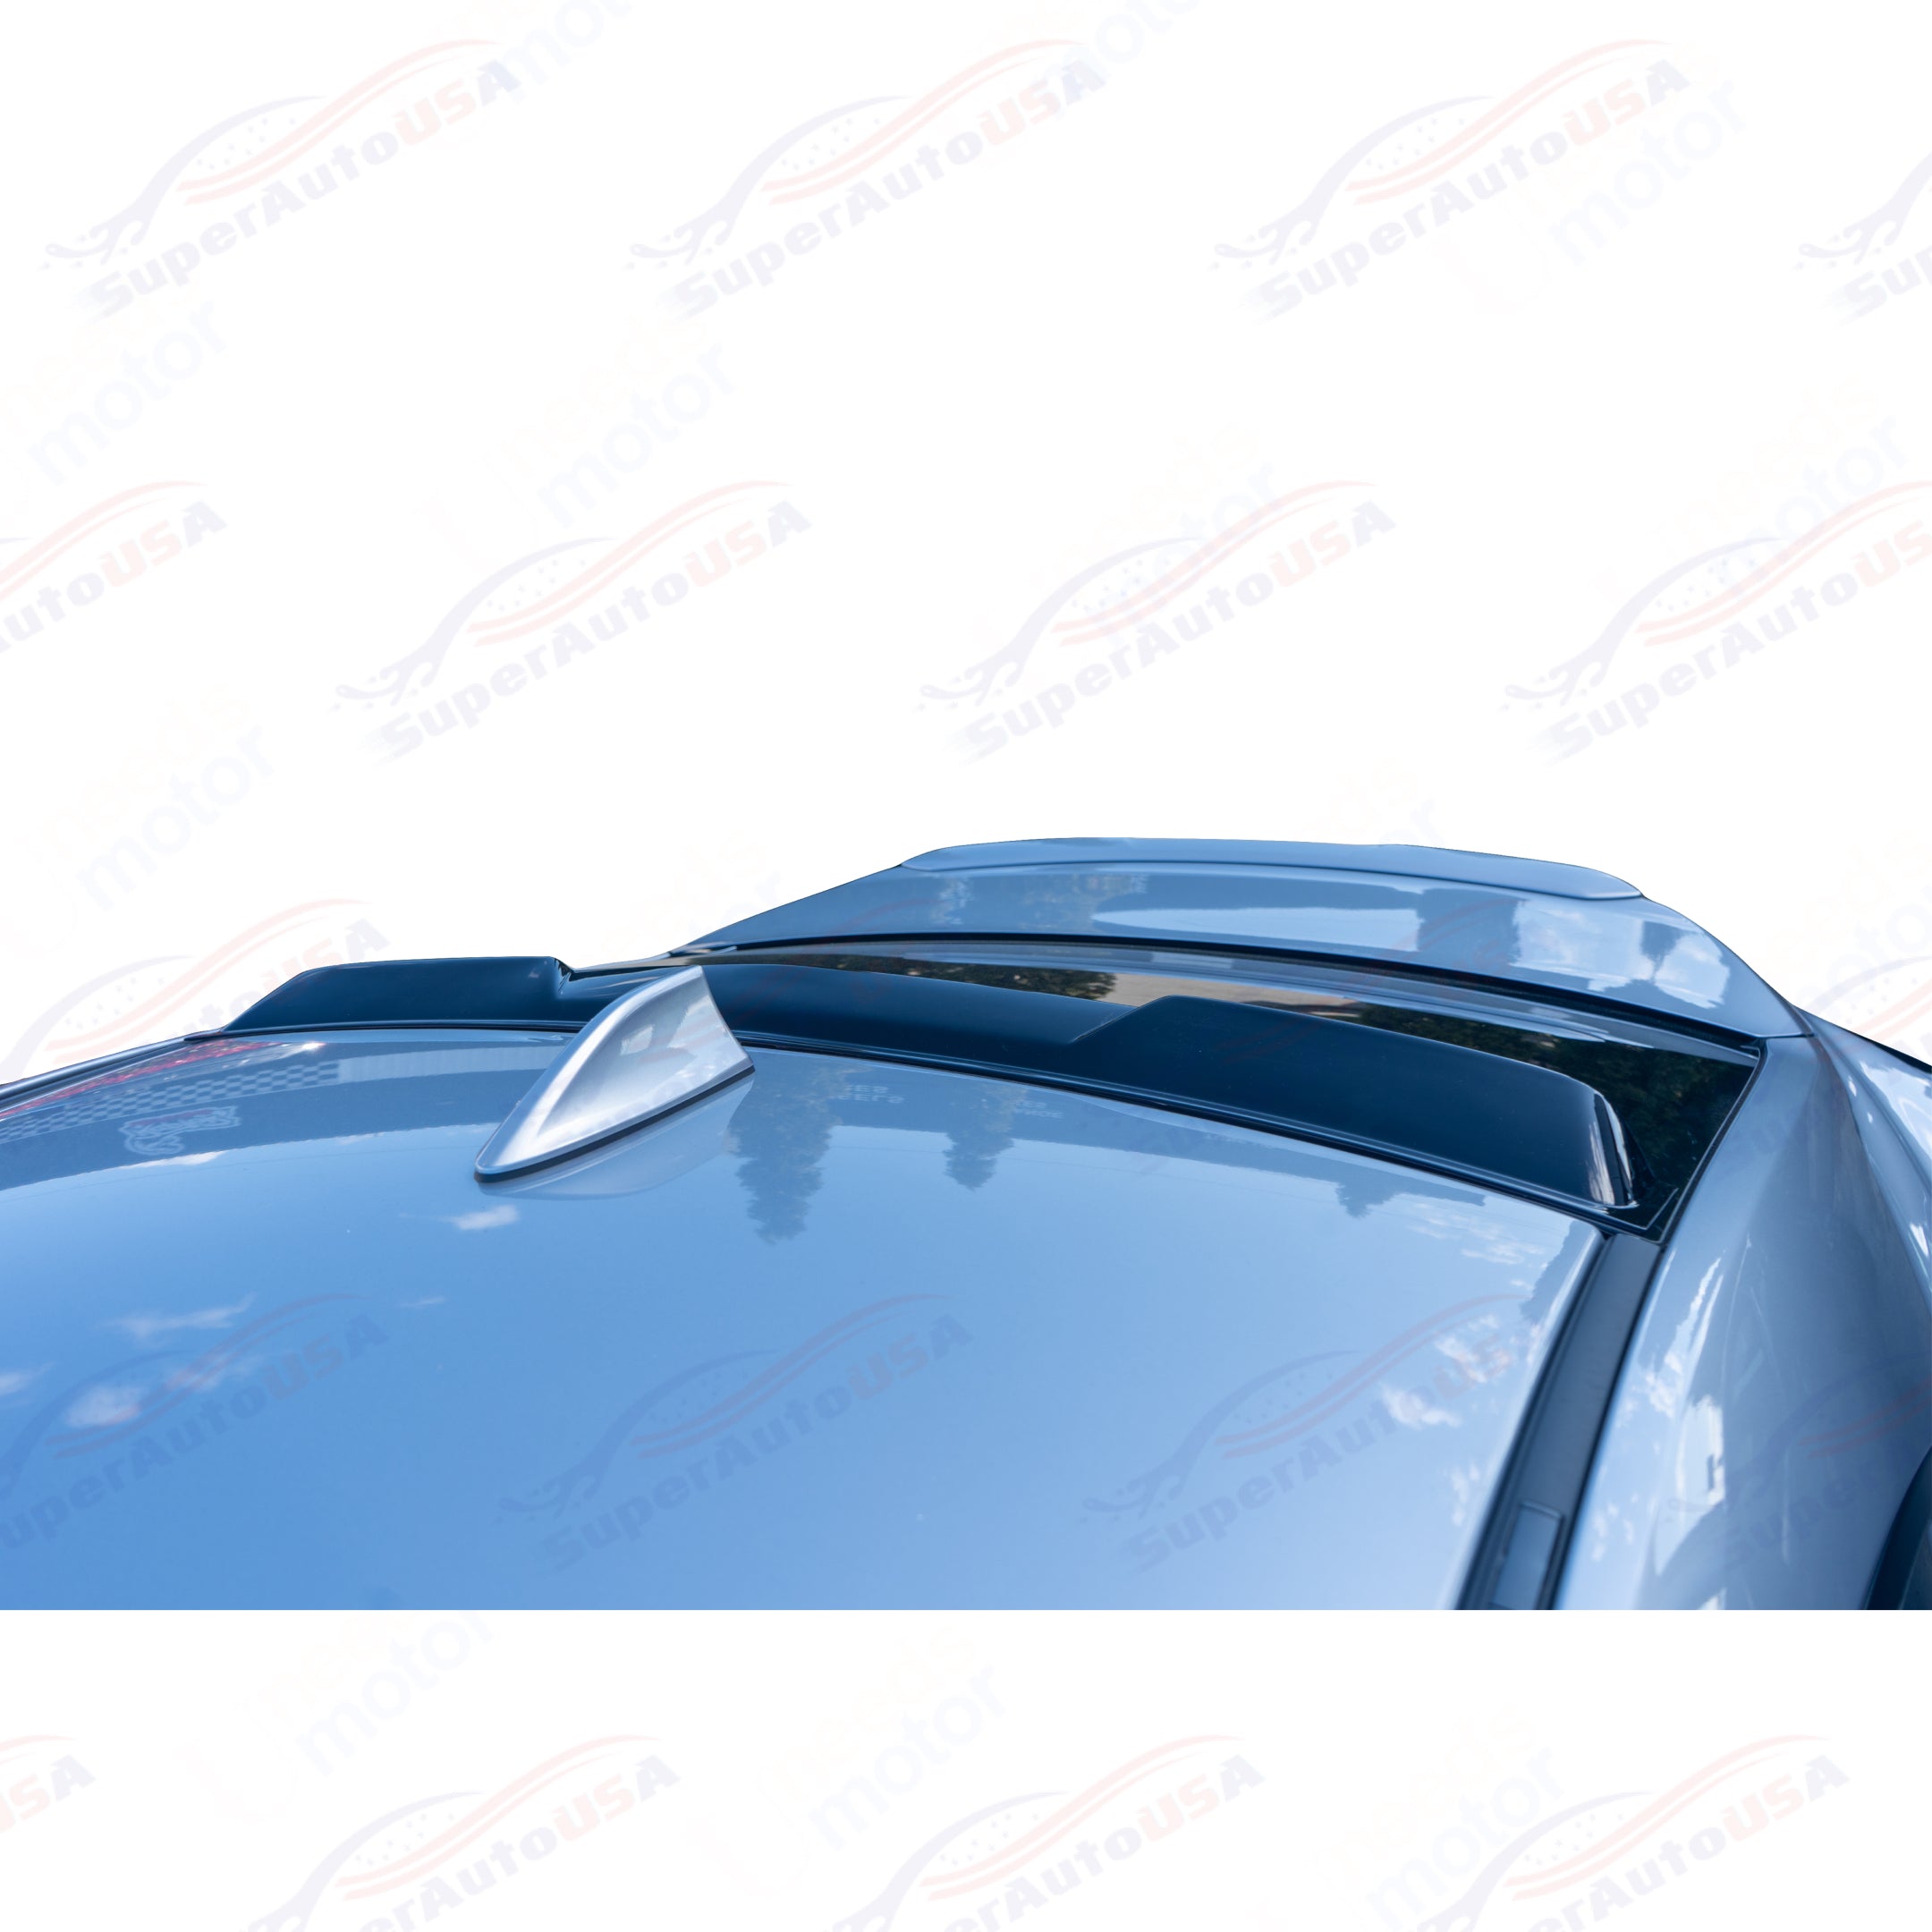 Fits for 2013-2023 Acura ILX Gloss Black Rear Roof Window Visor Spoiler